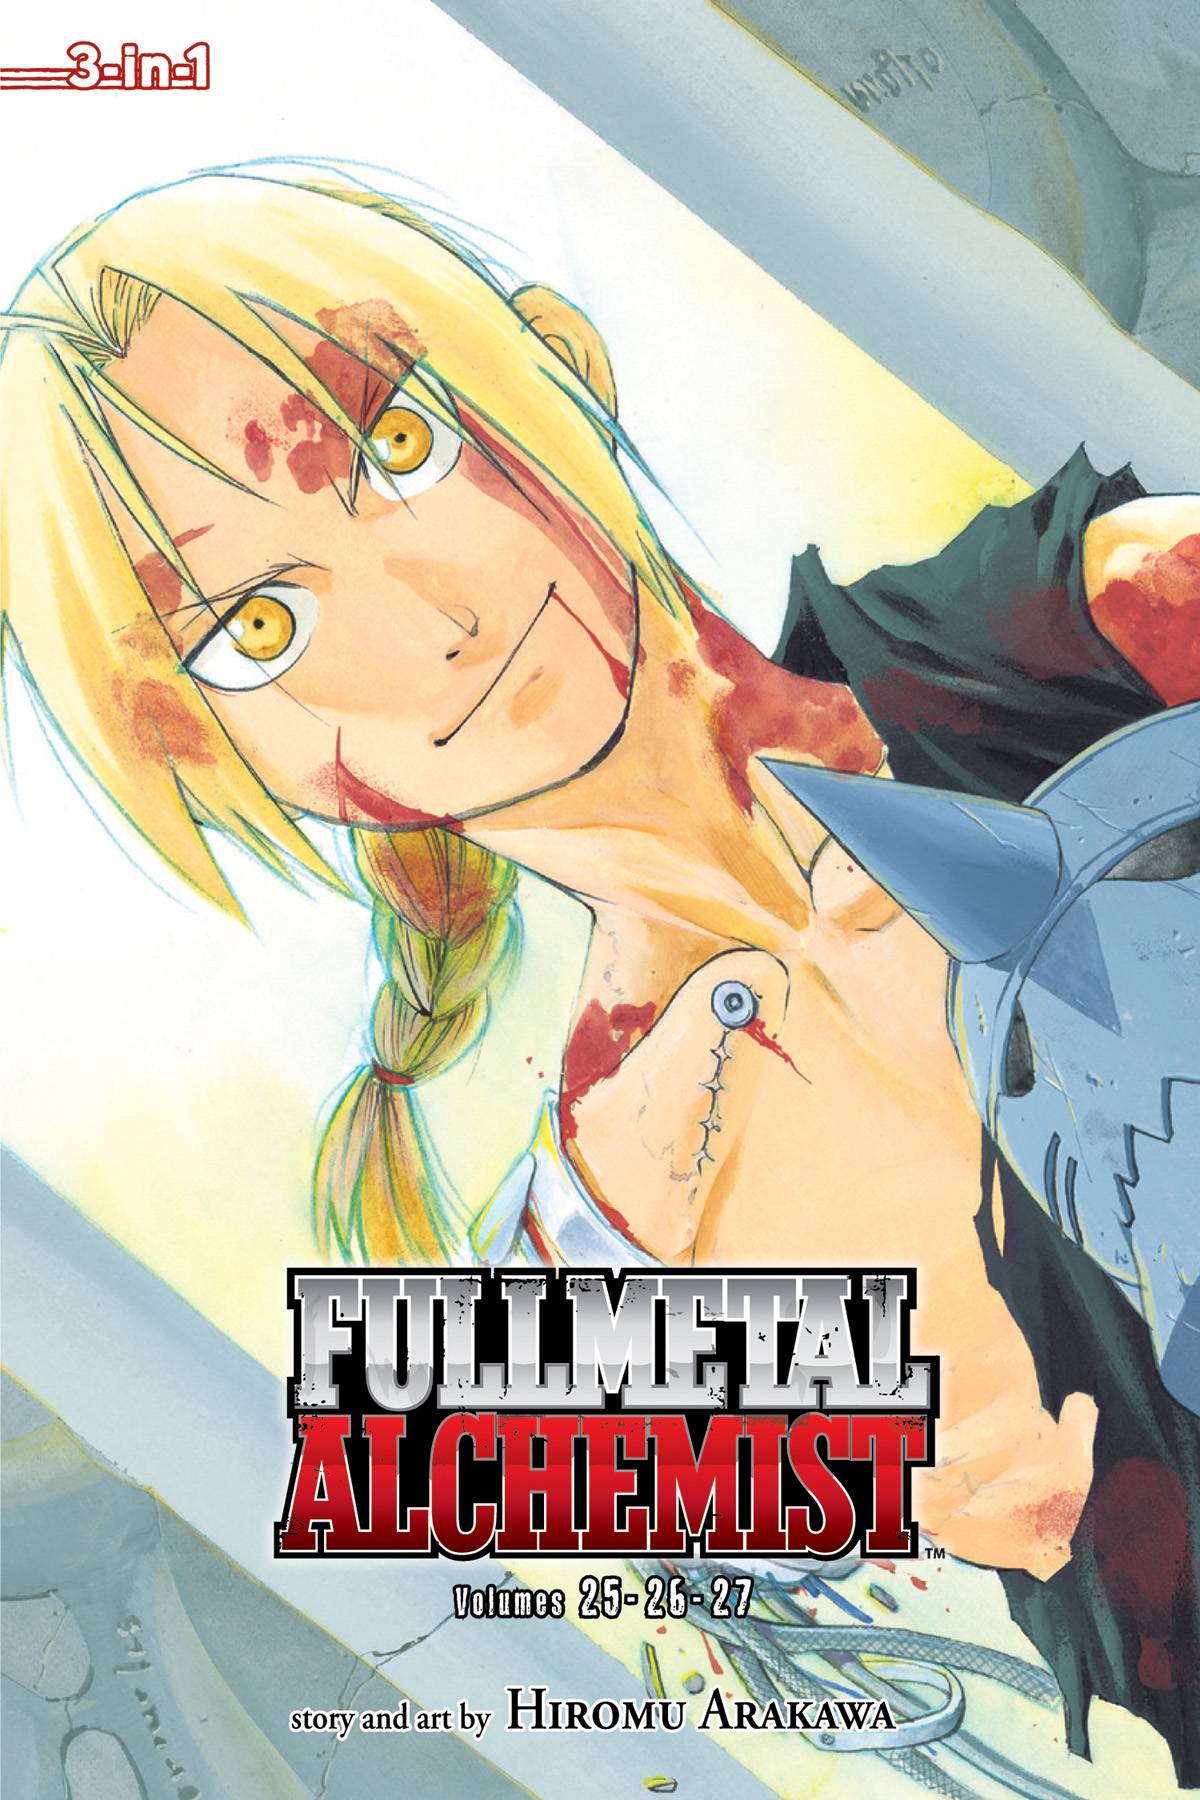 Fullmetal Alchemist 3-in-1 Edition Manga Volume 9